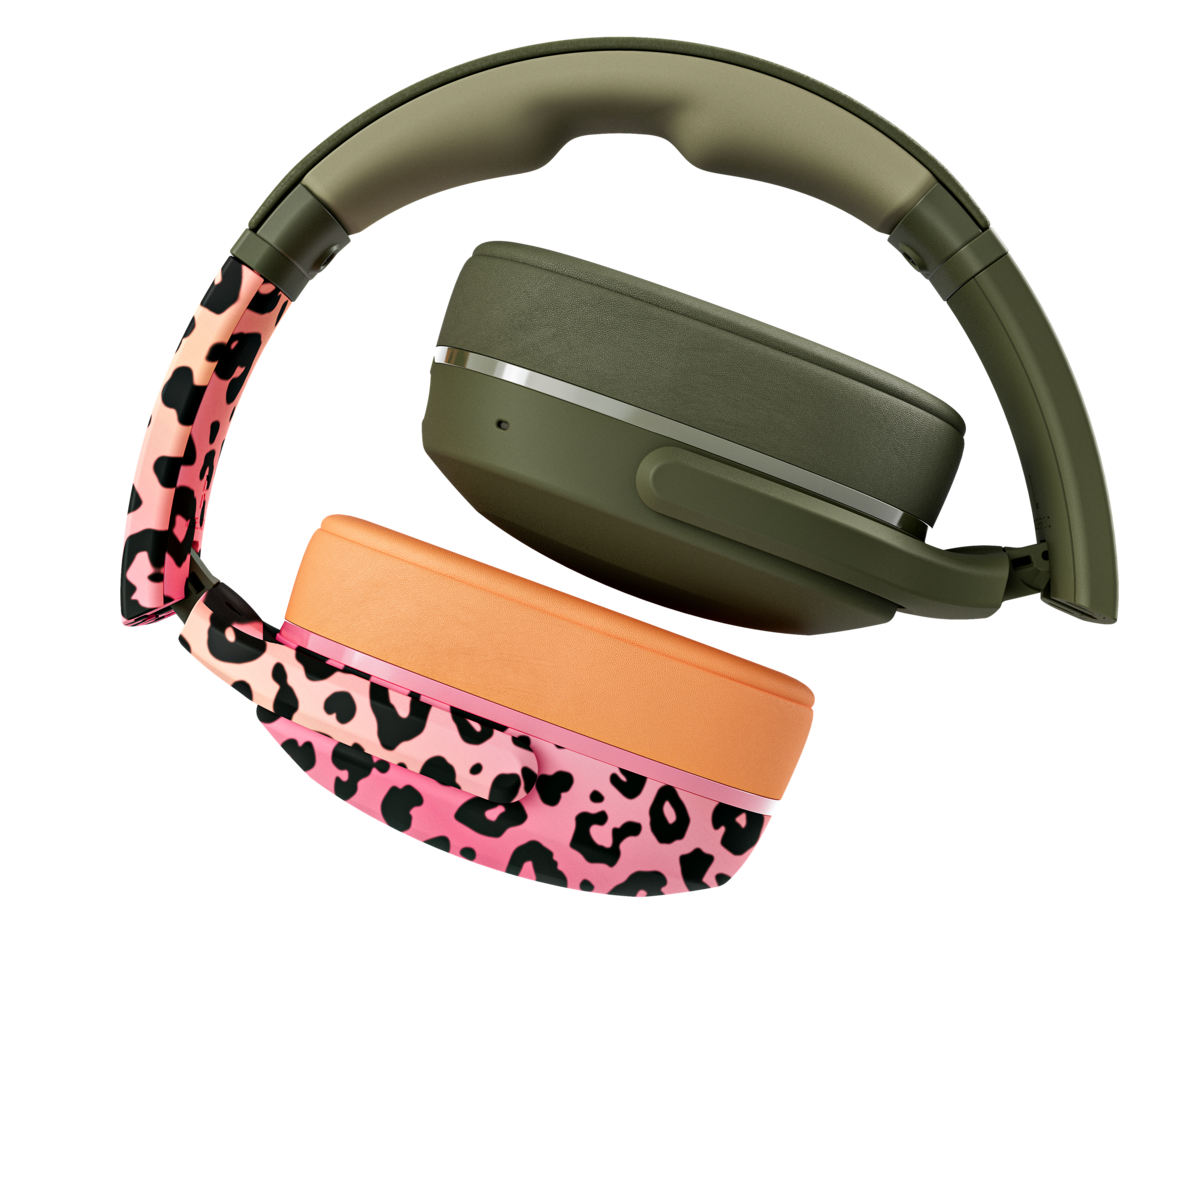 Crusher® Evo  Sensory Bass Headphones with Personal Sound